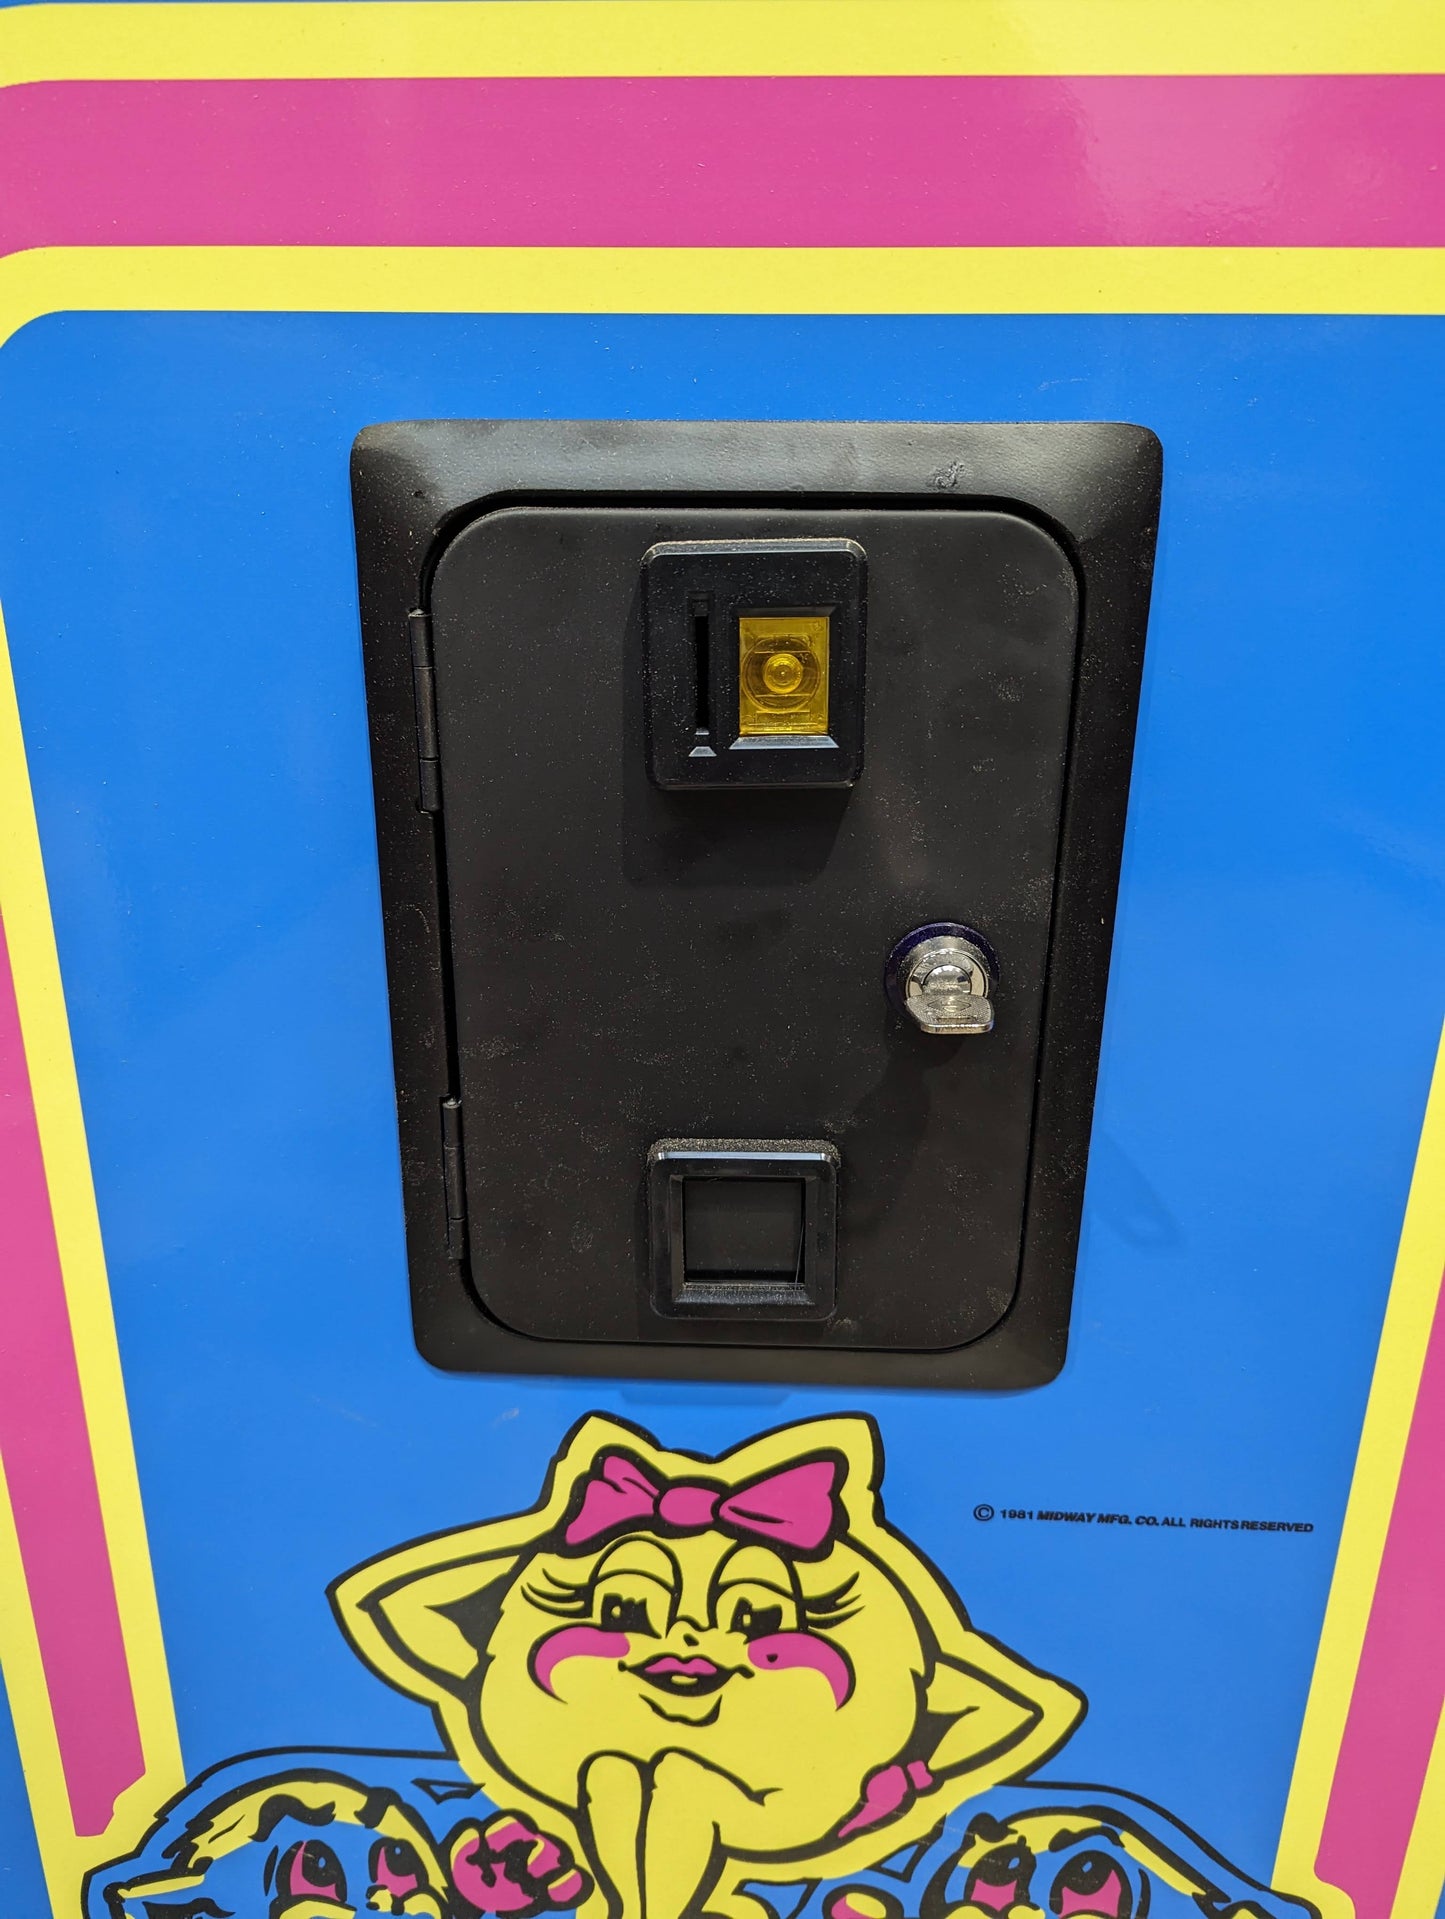 Ms Pacman Arcade Machine - Accurate Replica